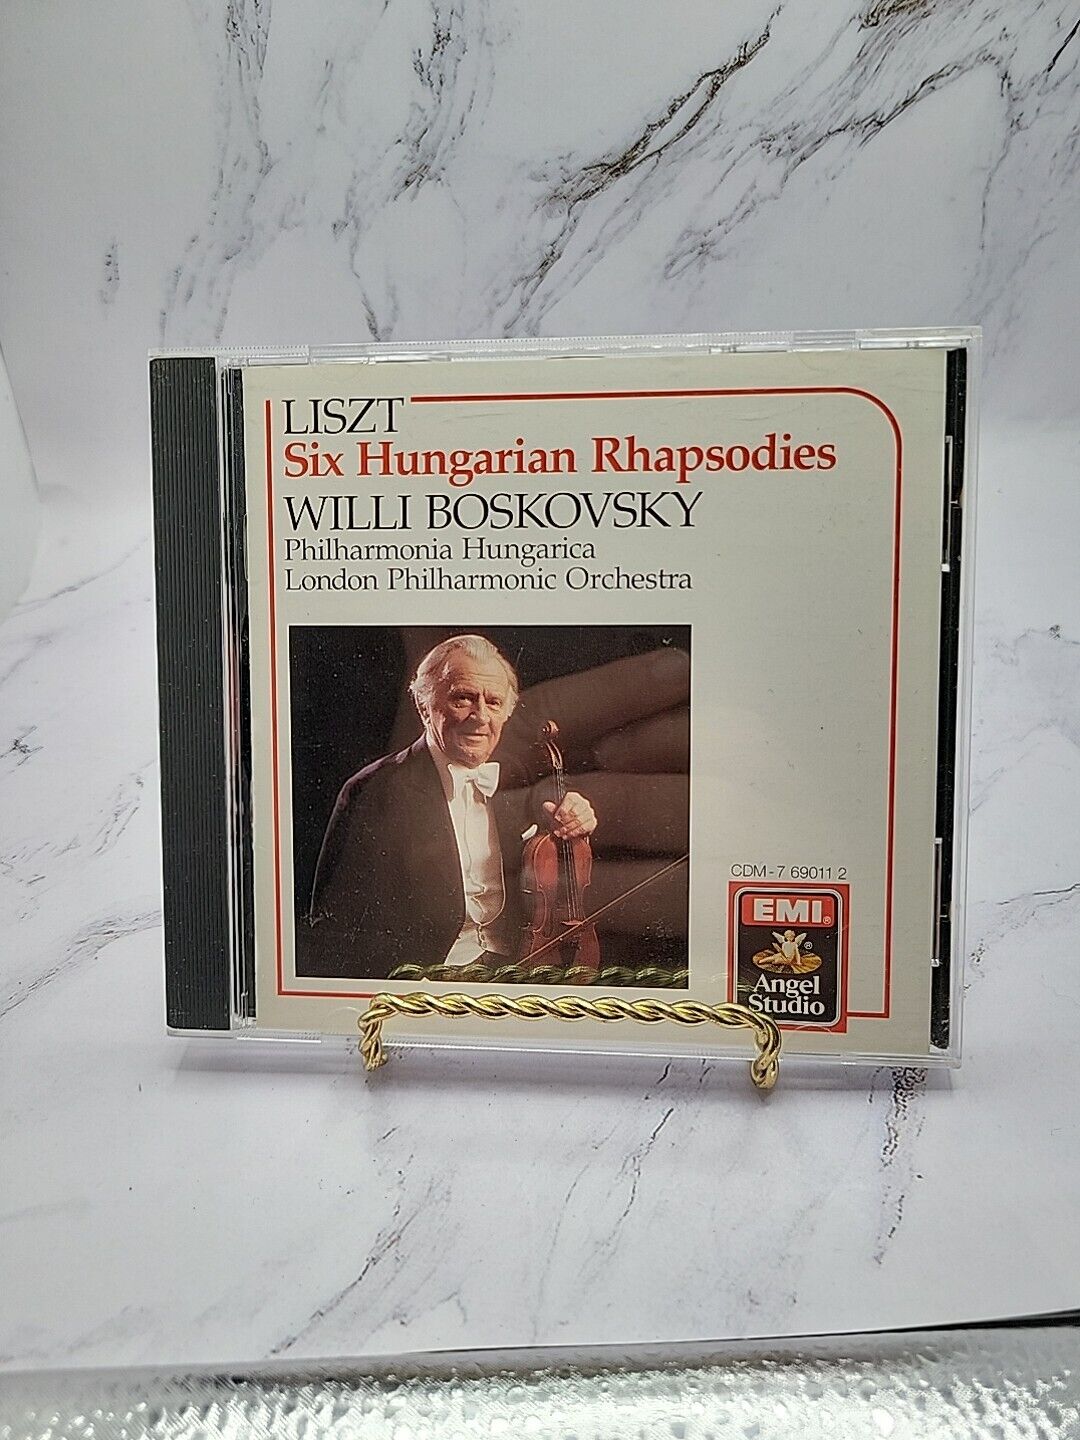 Liszt: Six Hungarian Rhapsodies - Audio CD By Franz Liszt - VERY GOOD